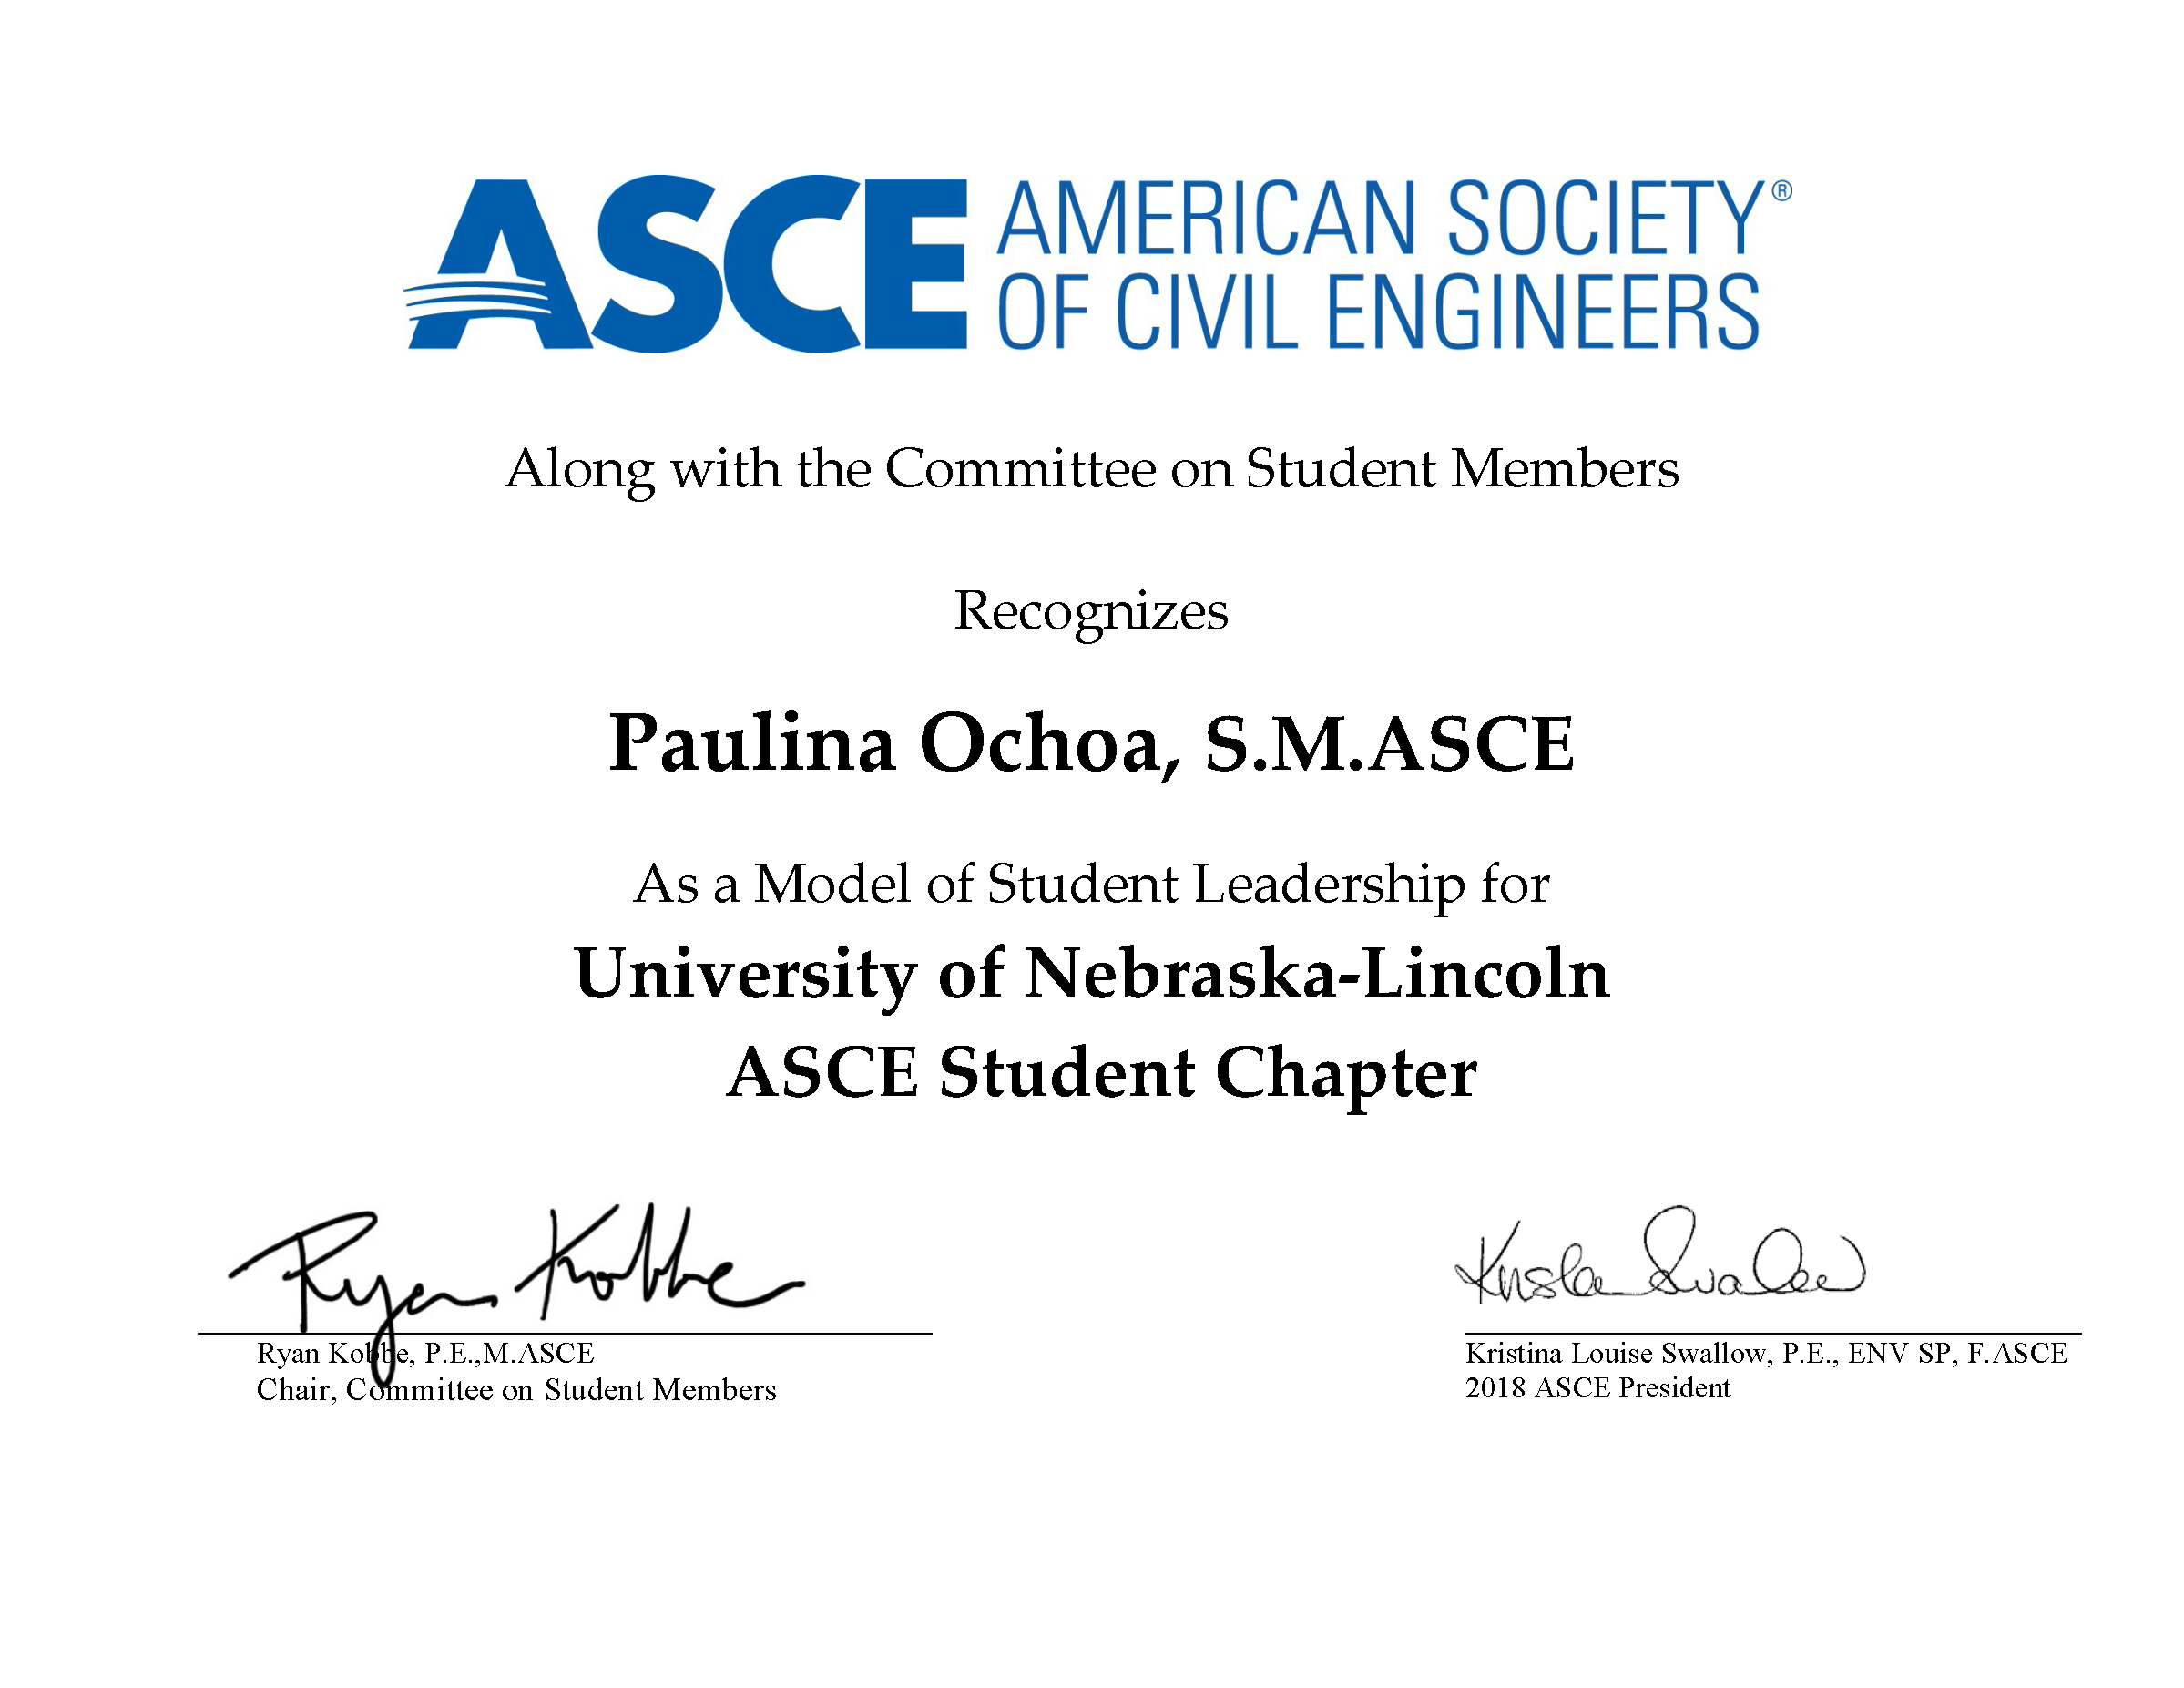 ASCE certificate for Paulina Ochoa